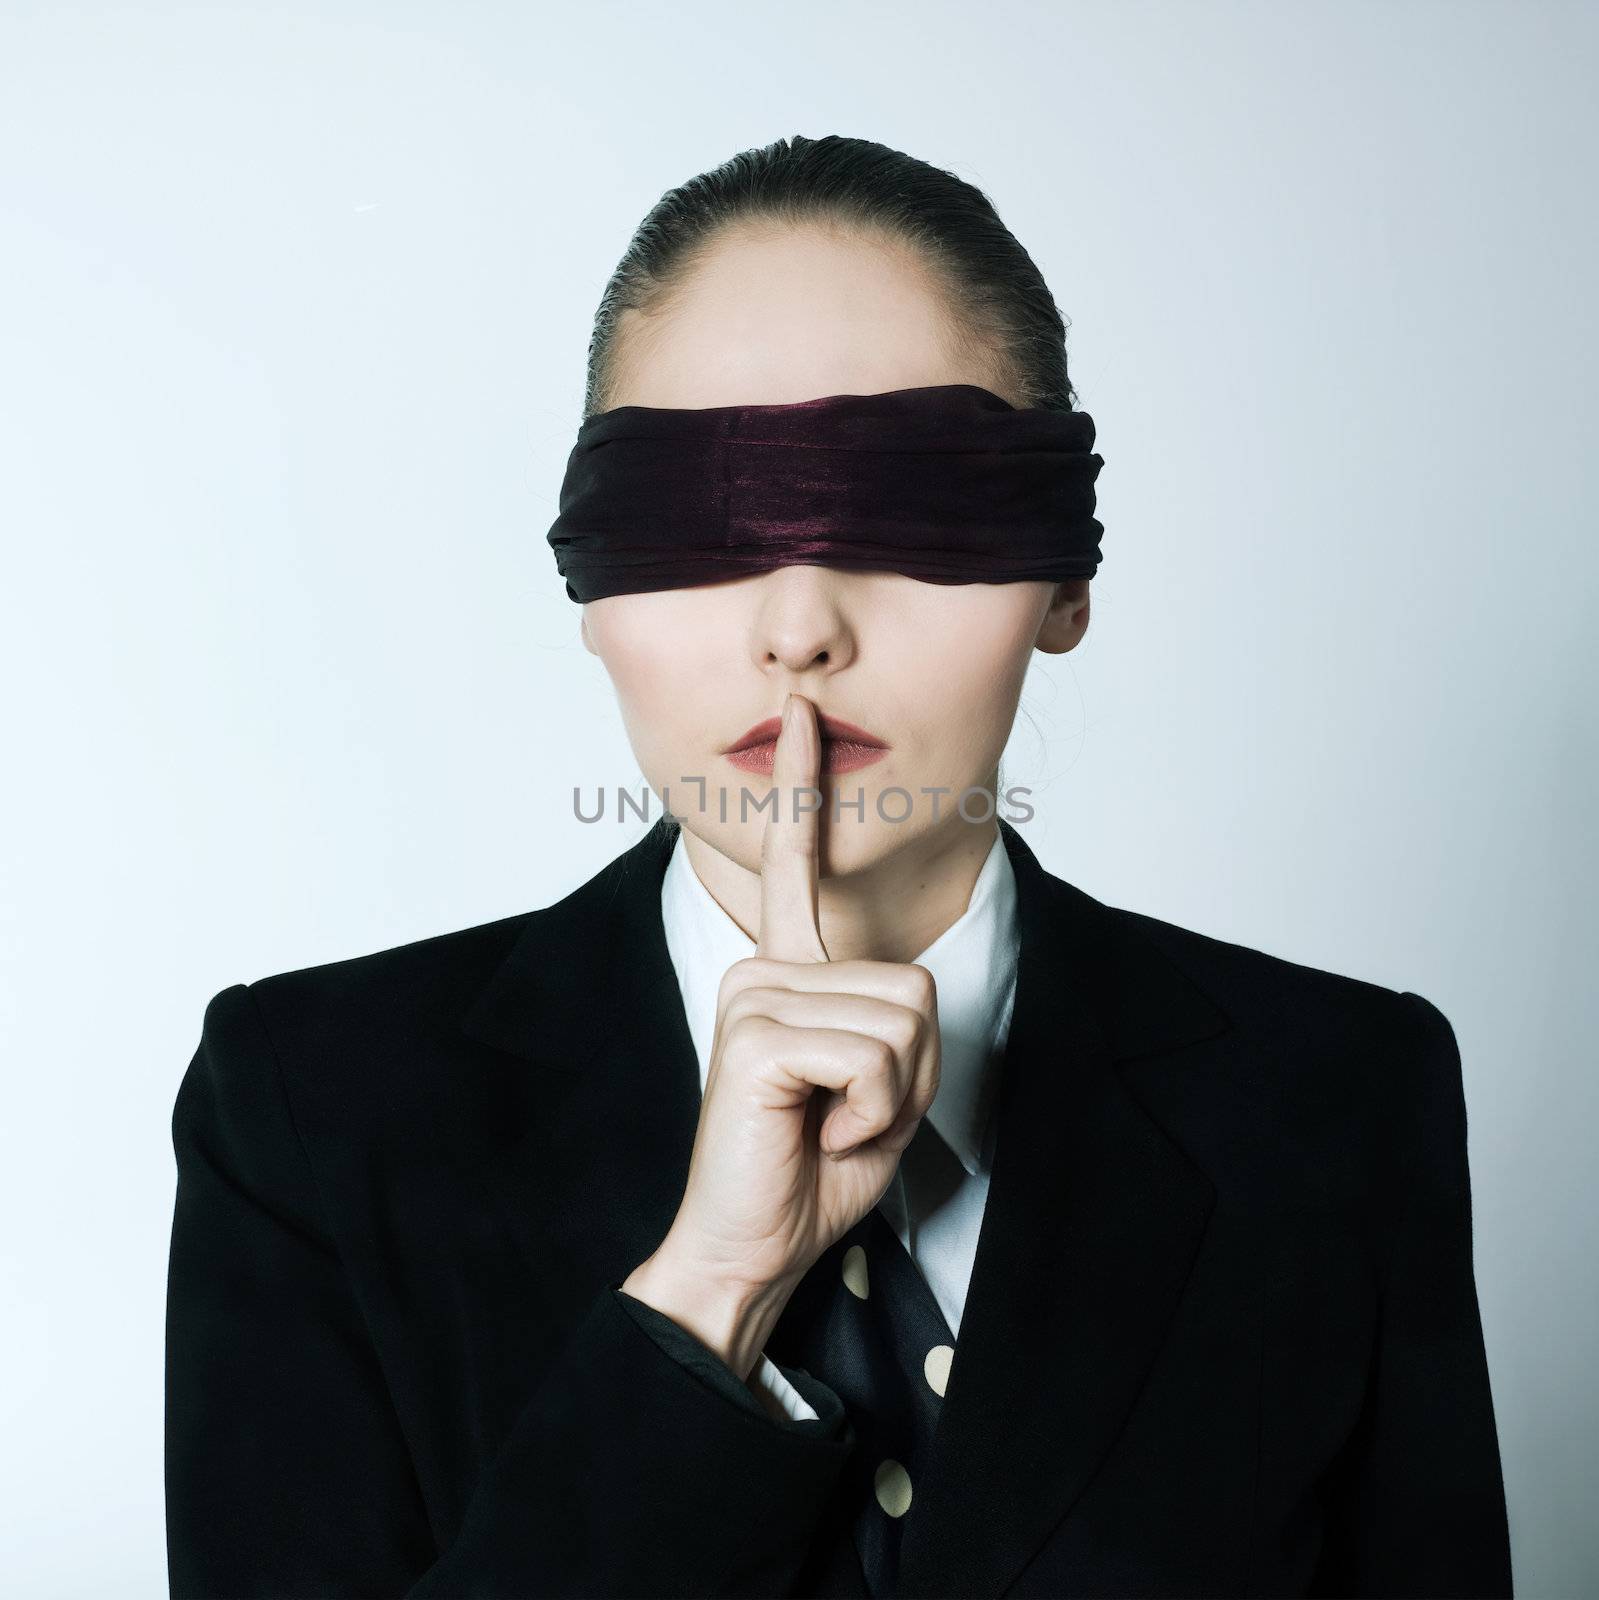 studio shot portrait  young blindfold business woman hushing finger on lips